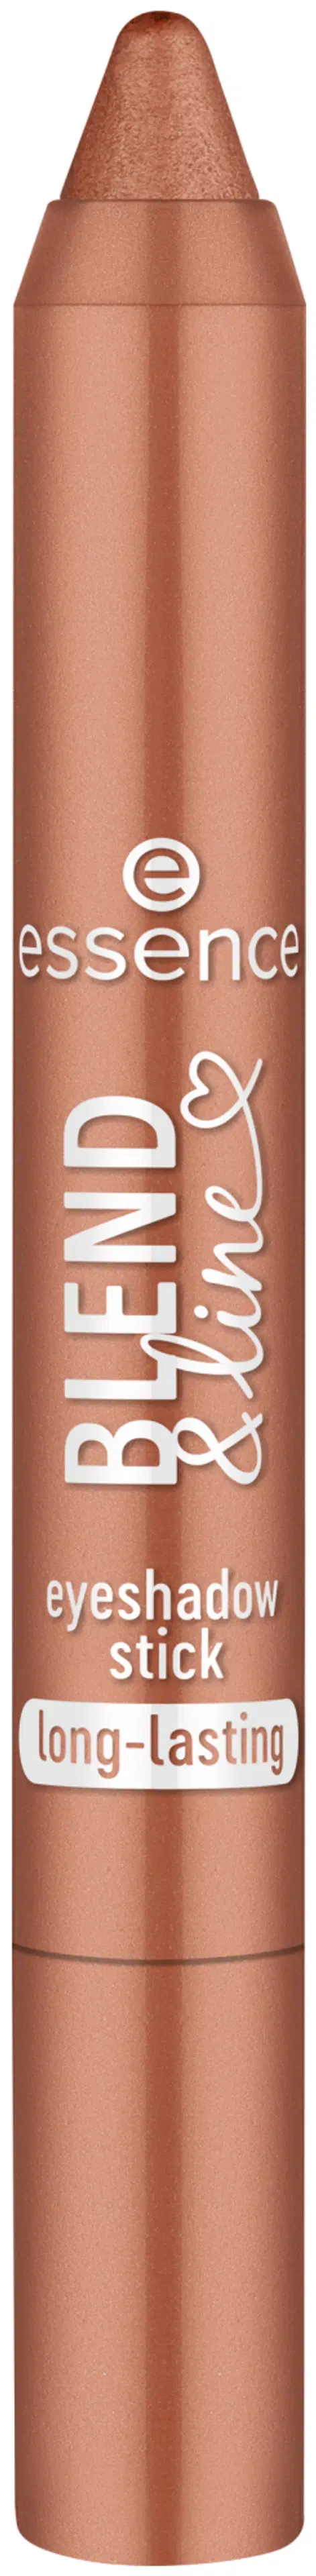 essence blend & line eyeshadow stick luomivärikynä 1,8 g